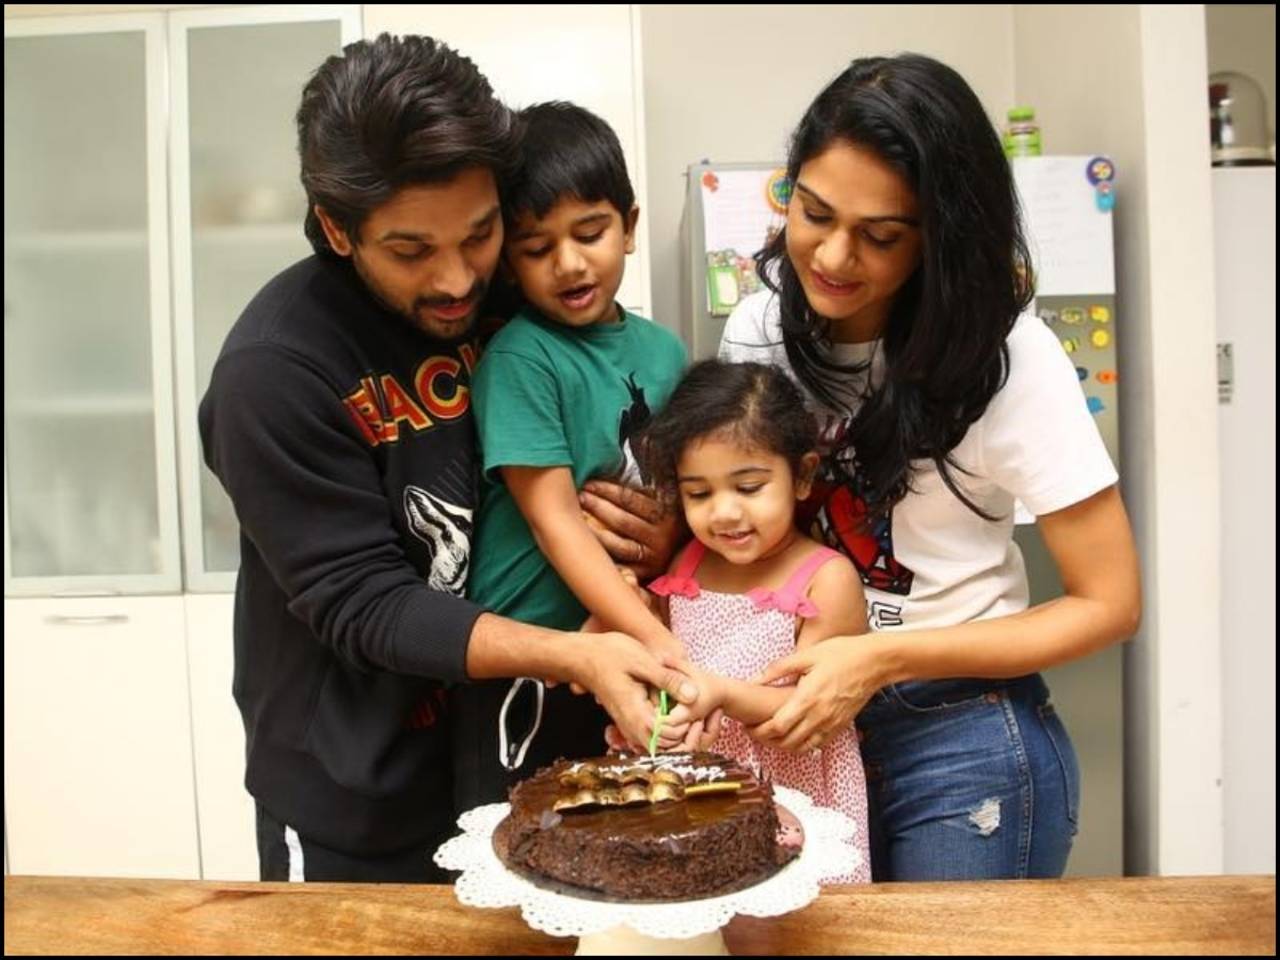 Arjun Shirt BIRTHDAY CAKE - Rashmi's Bakery